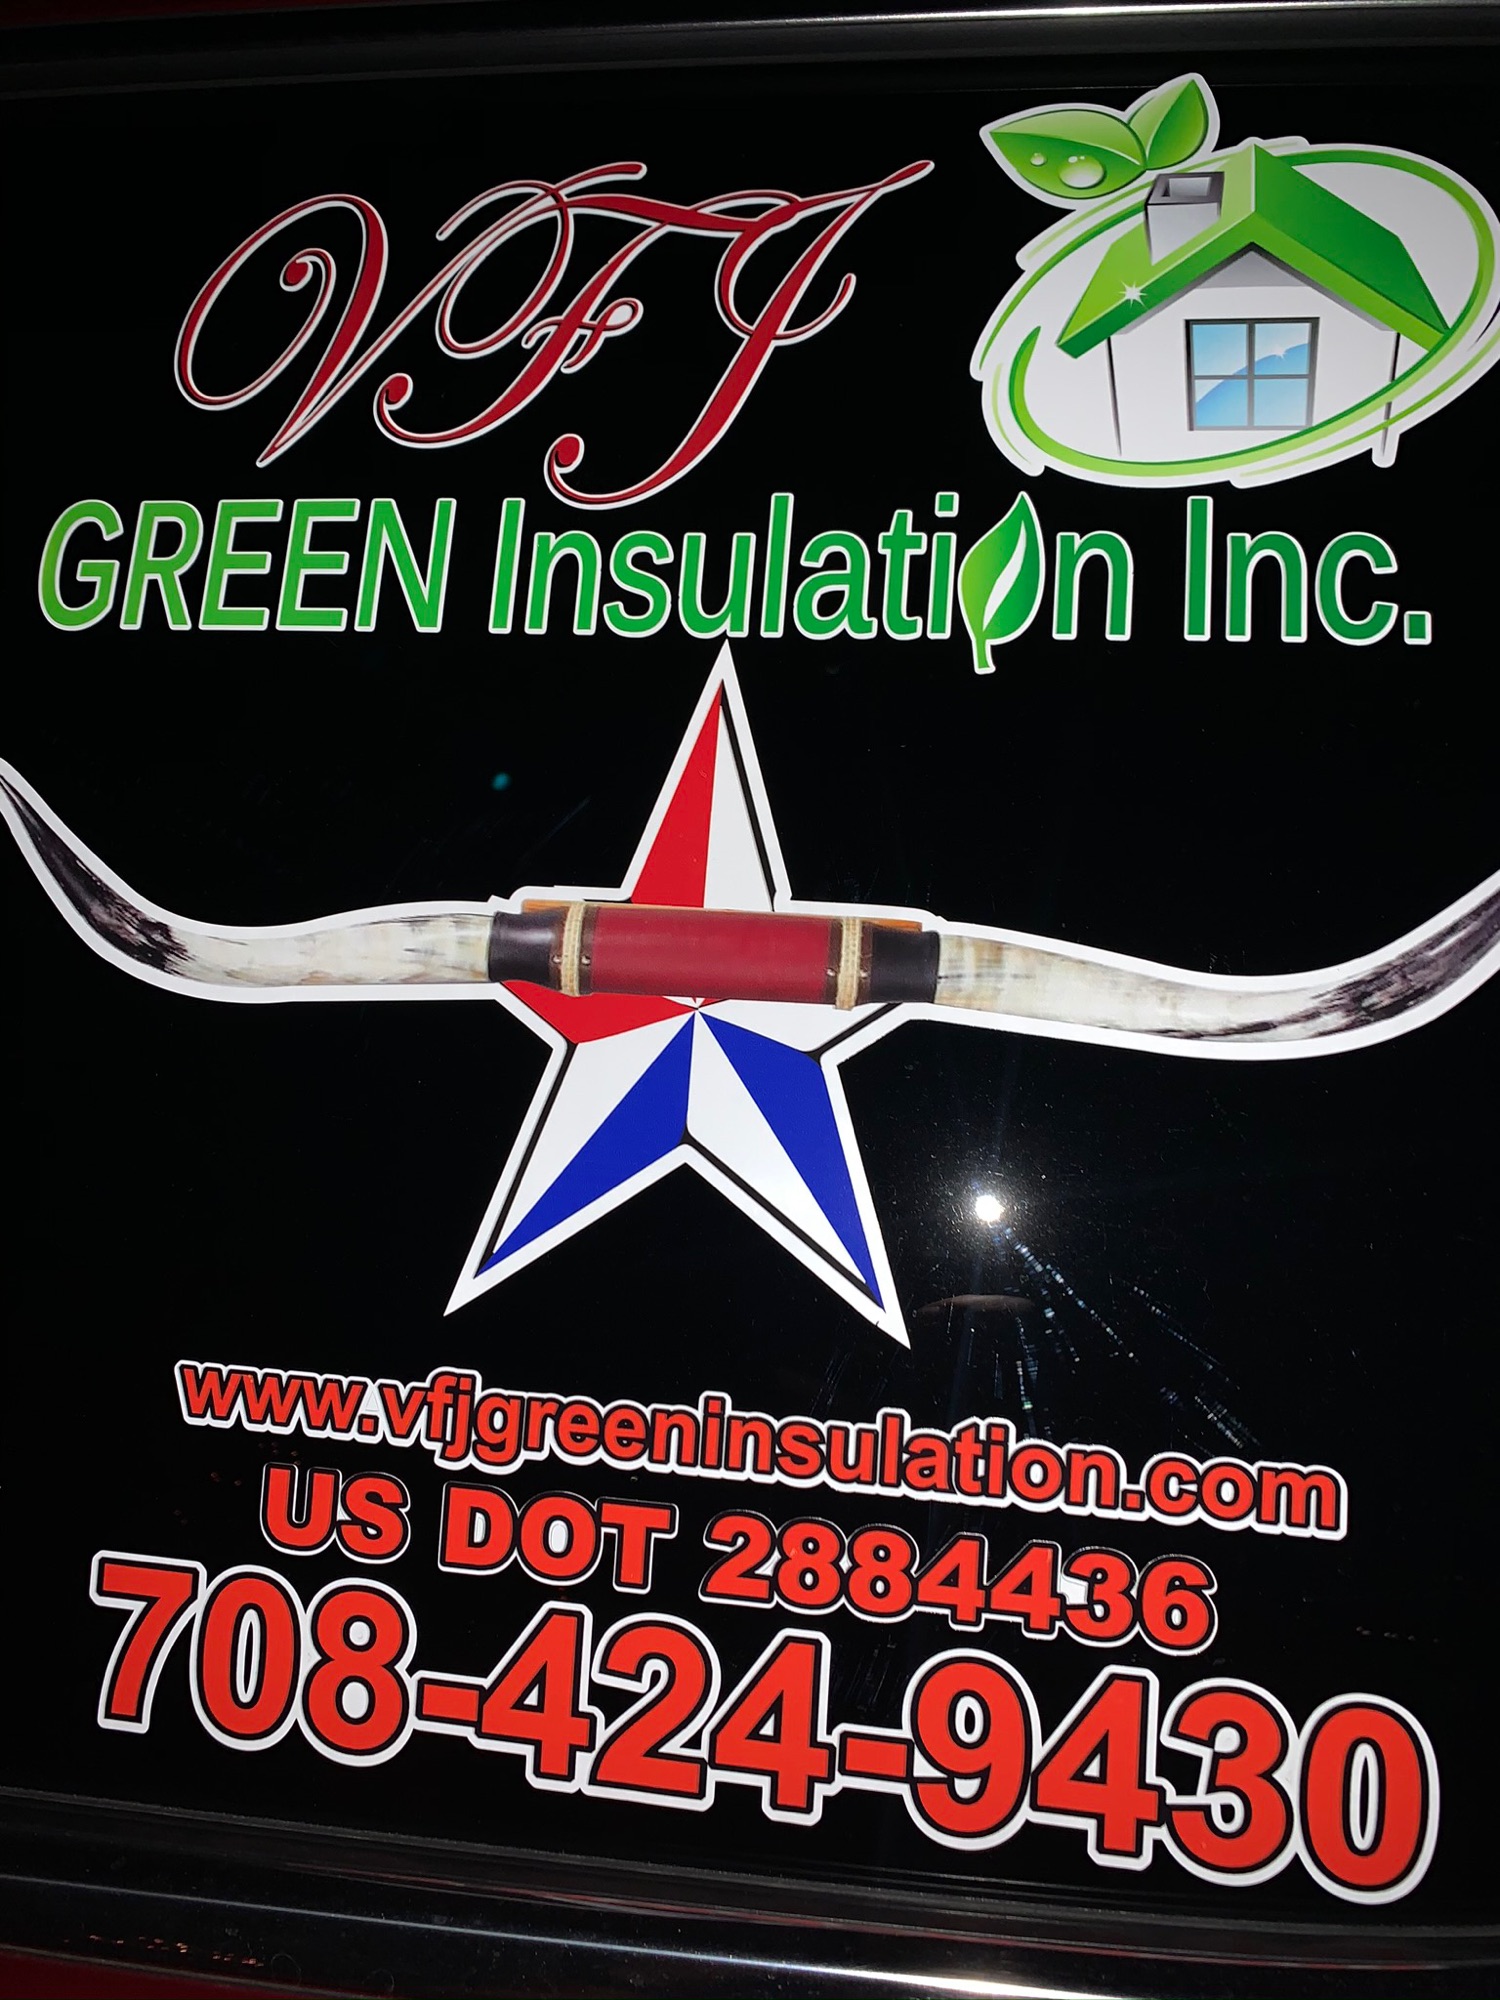 VFJ Green Insulation Logo